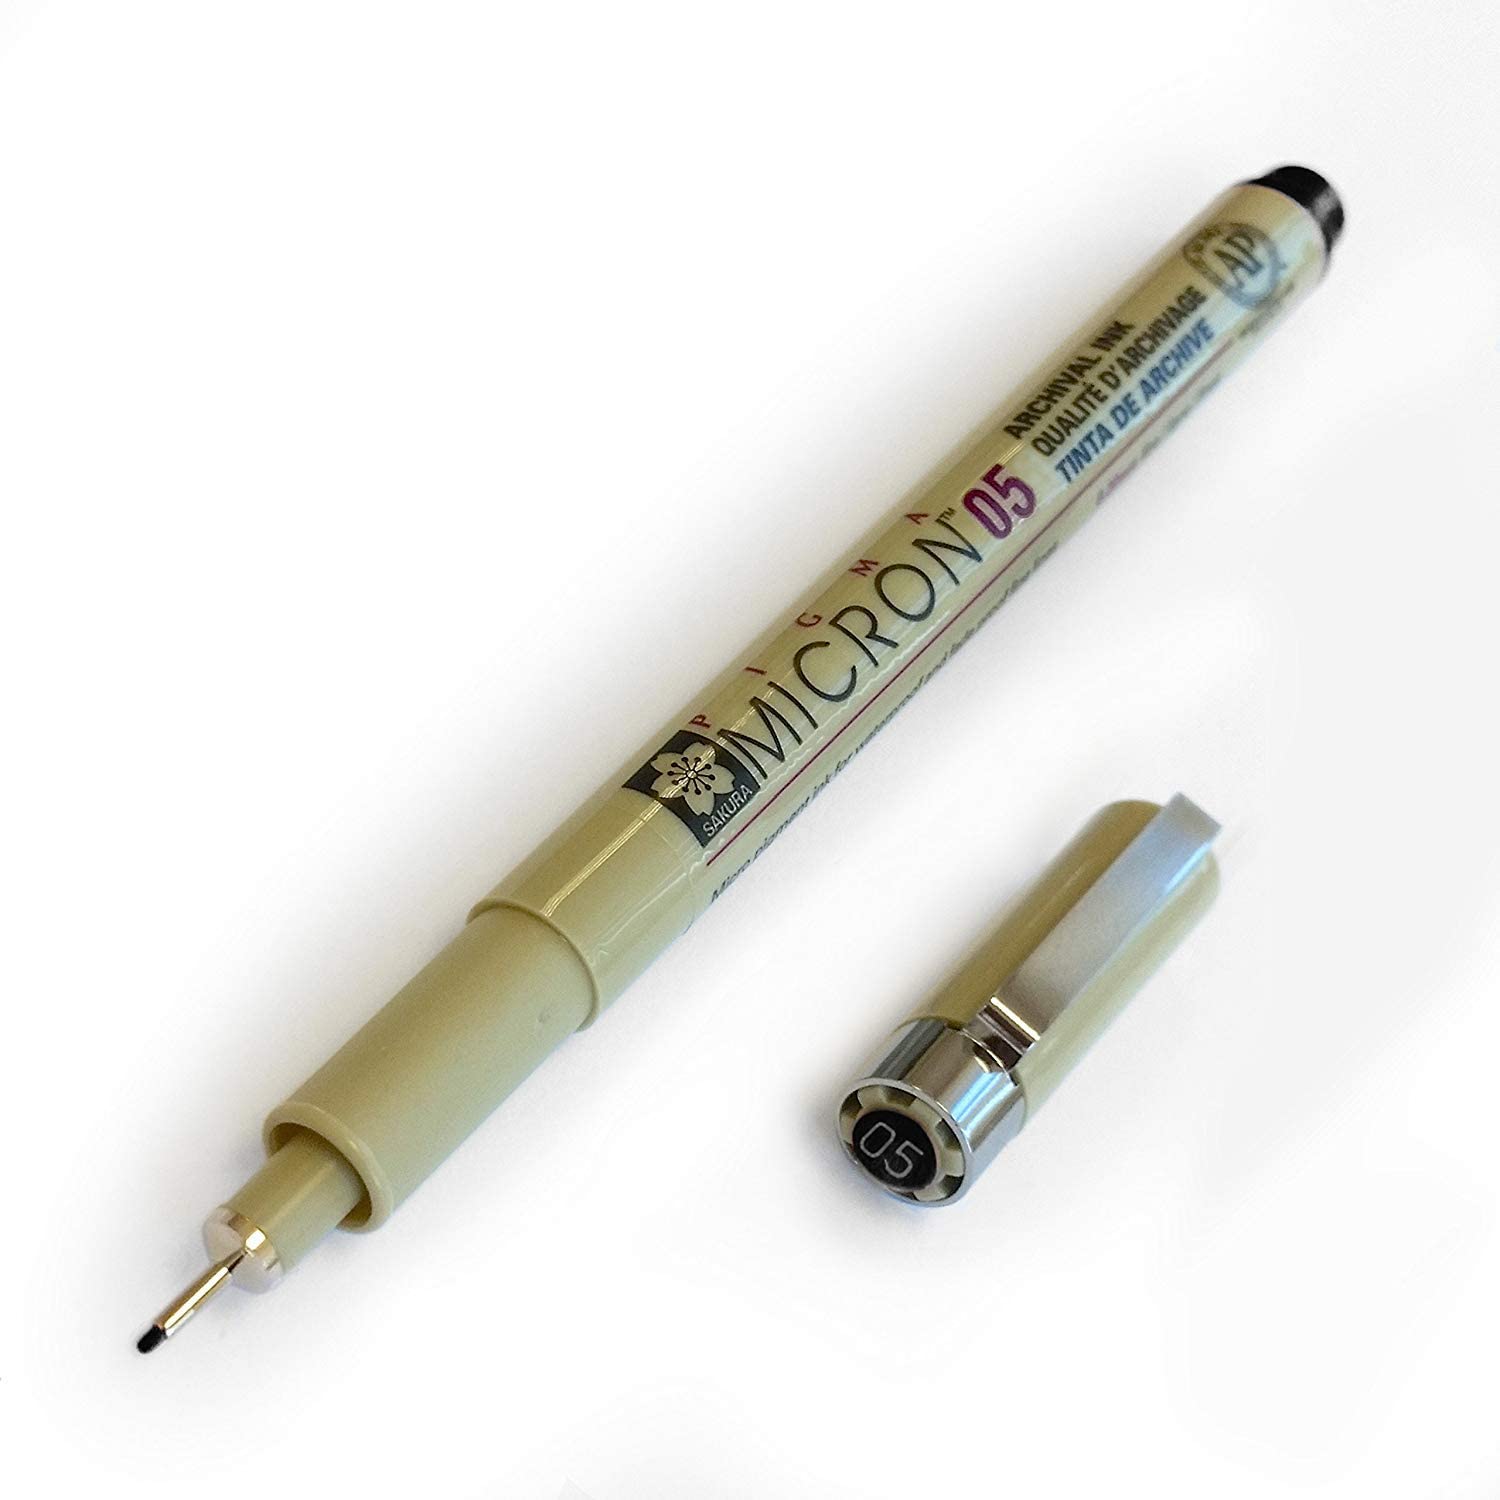 Pigma Micron 05 Fineliner Pen, 0.45mm, Black